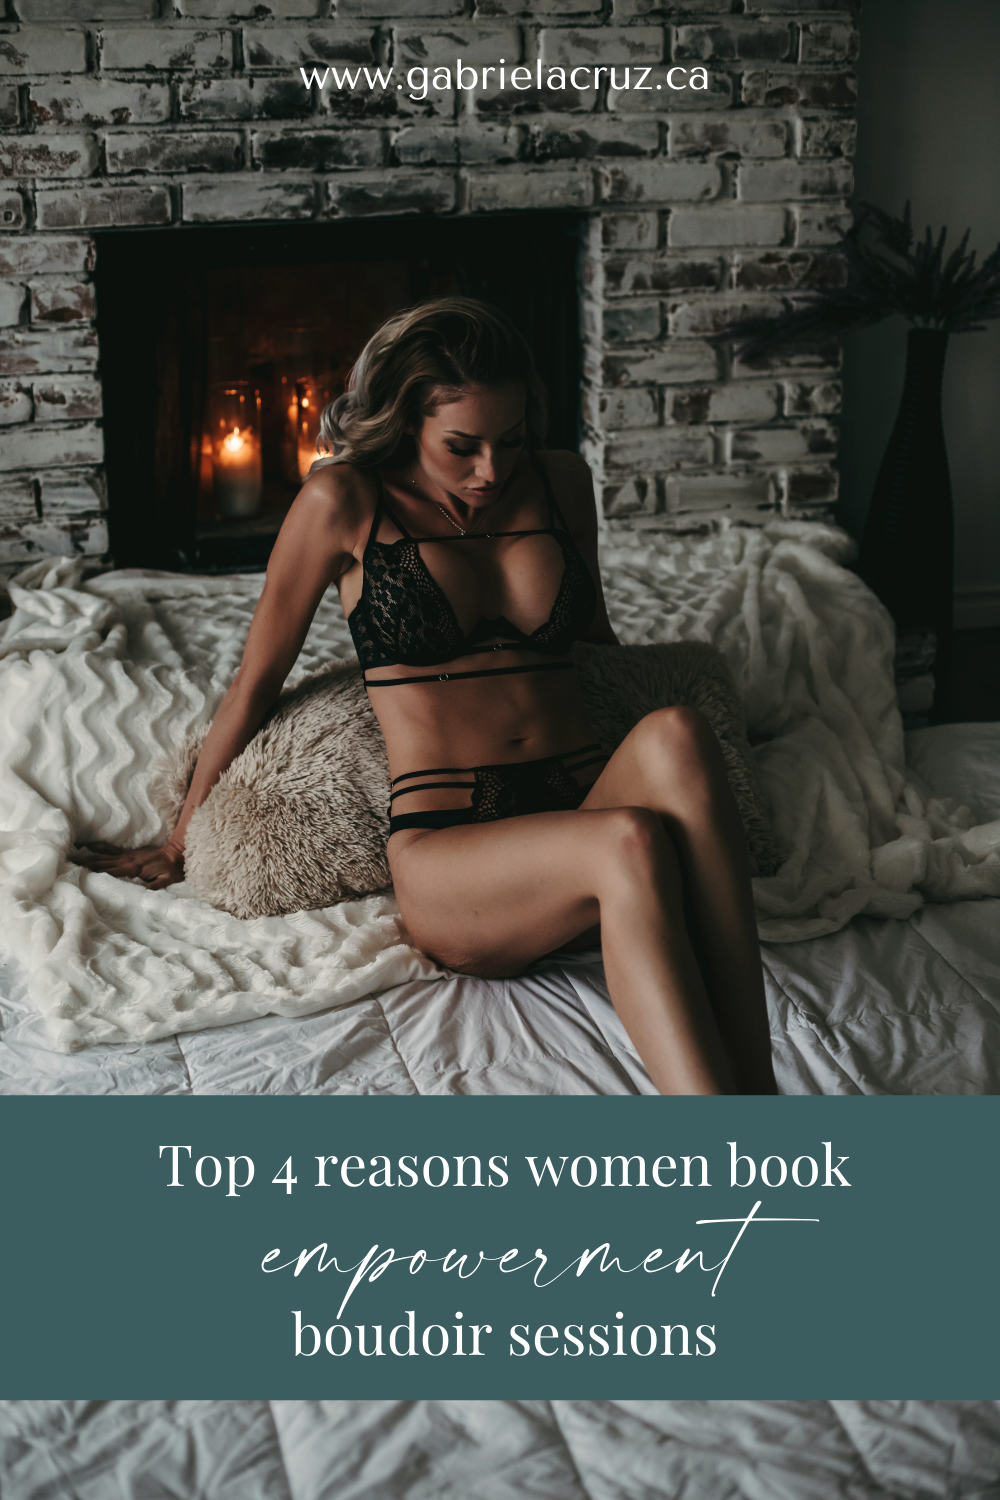 What's an empowerment boudoir photoshoot and why do women book them? The professionals at Gabriela Cruz Boudoir explain.